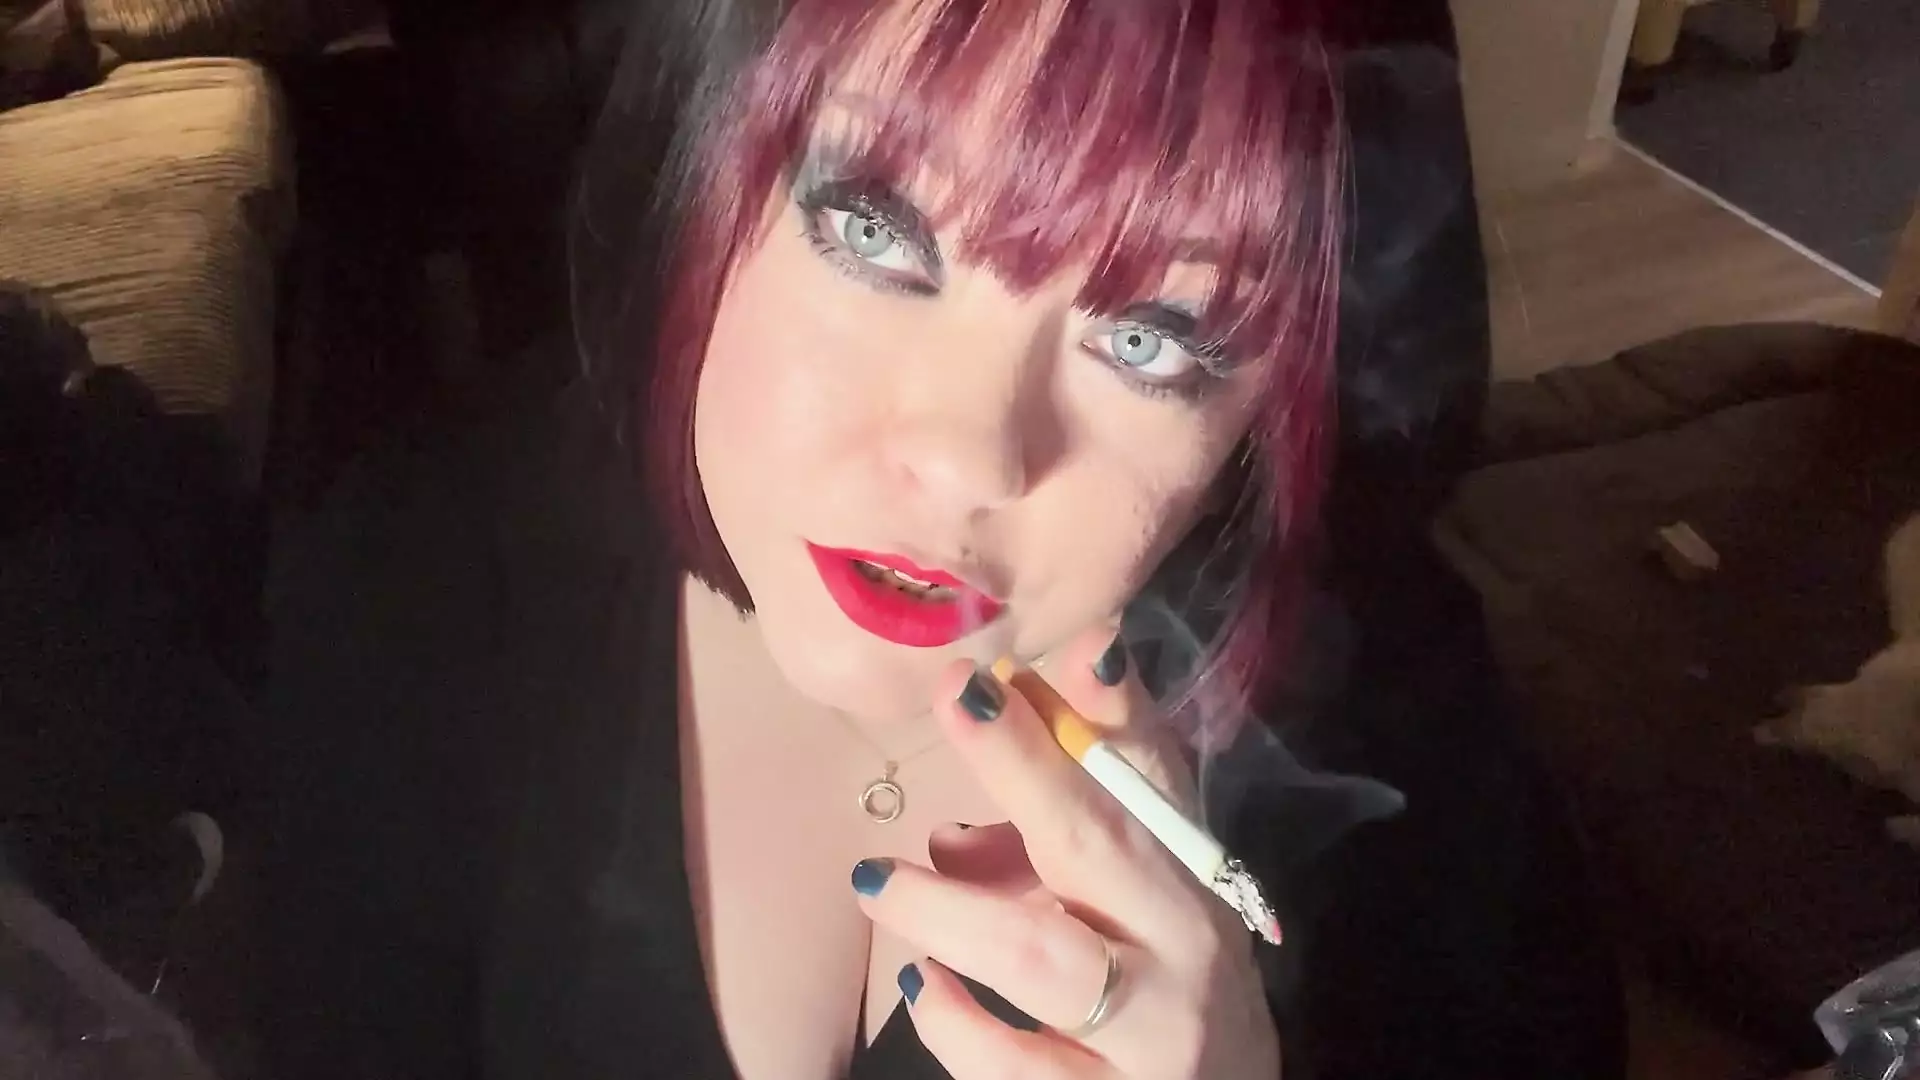 British Tart Tina Snua Tugs On Her Perky Nipples and Chain Smokes 2 Cigarettes